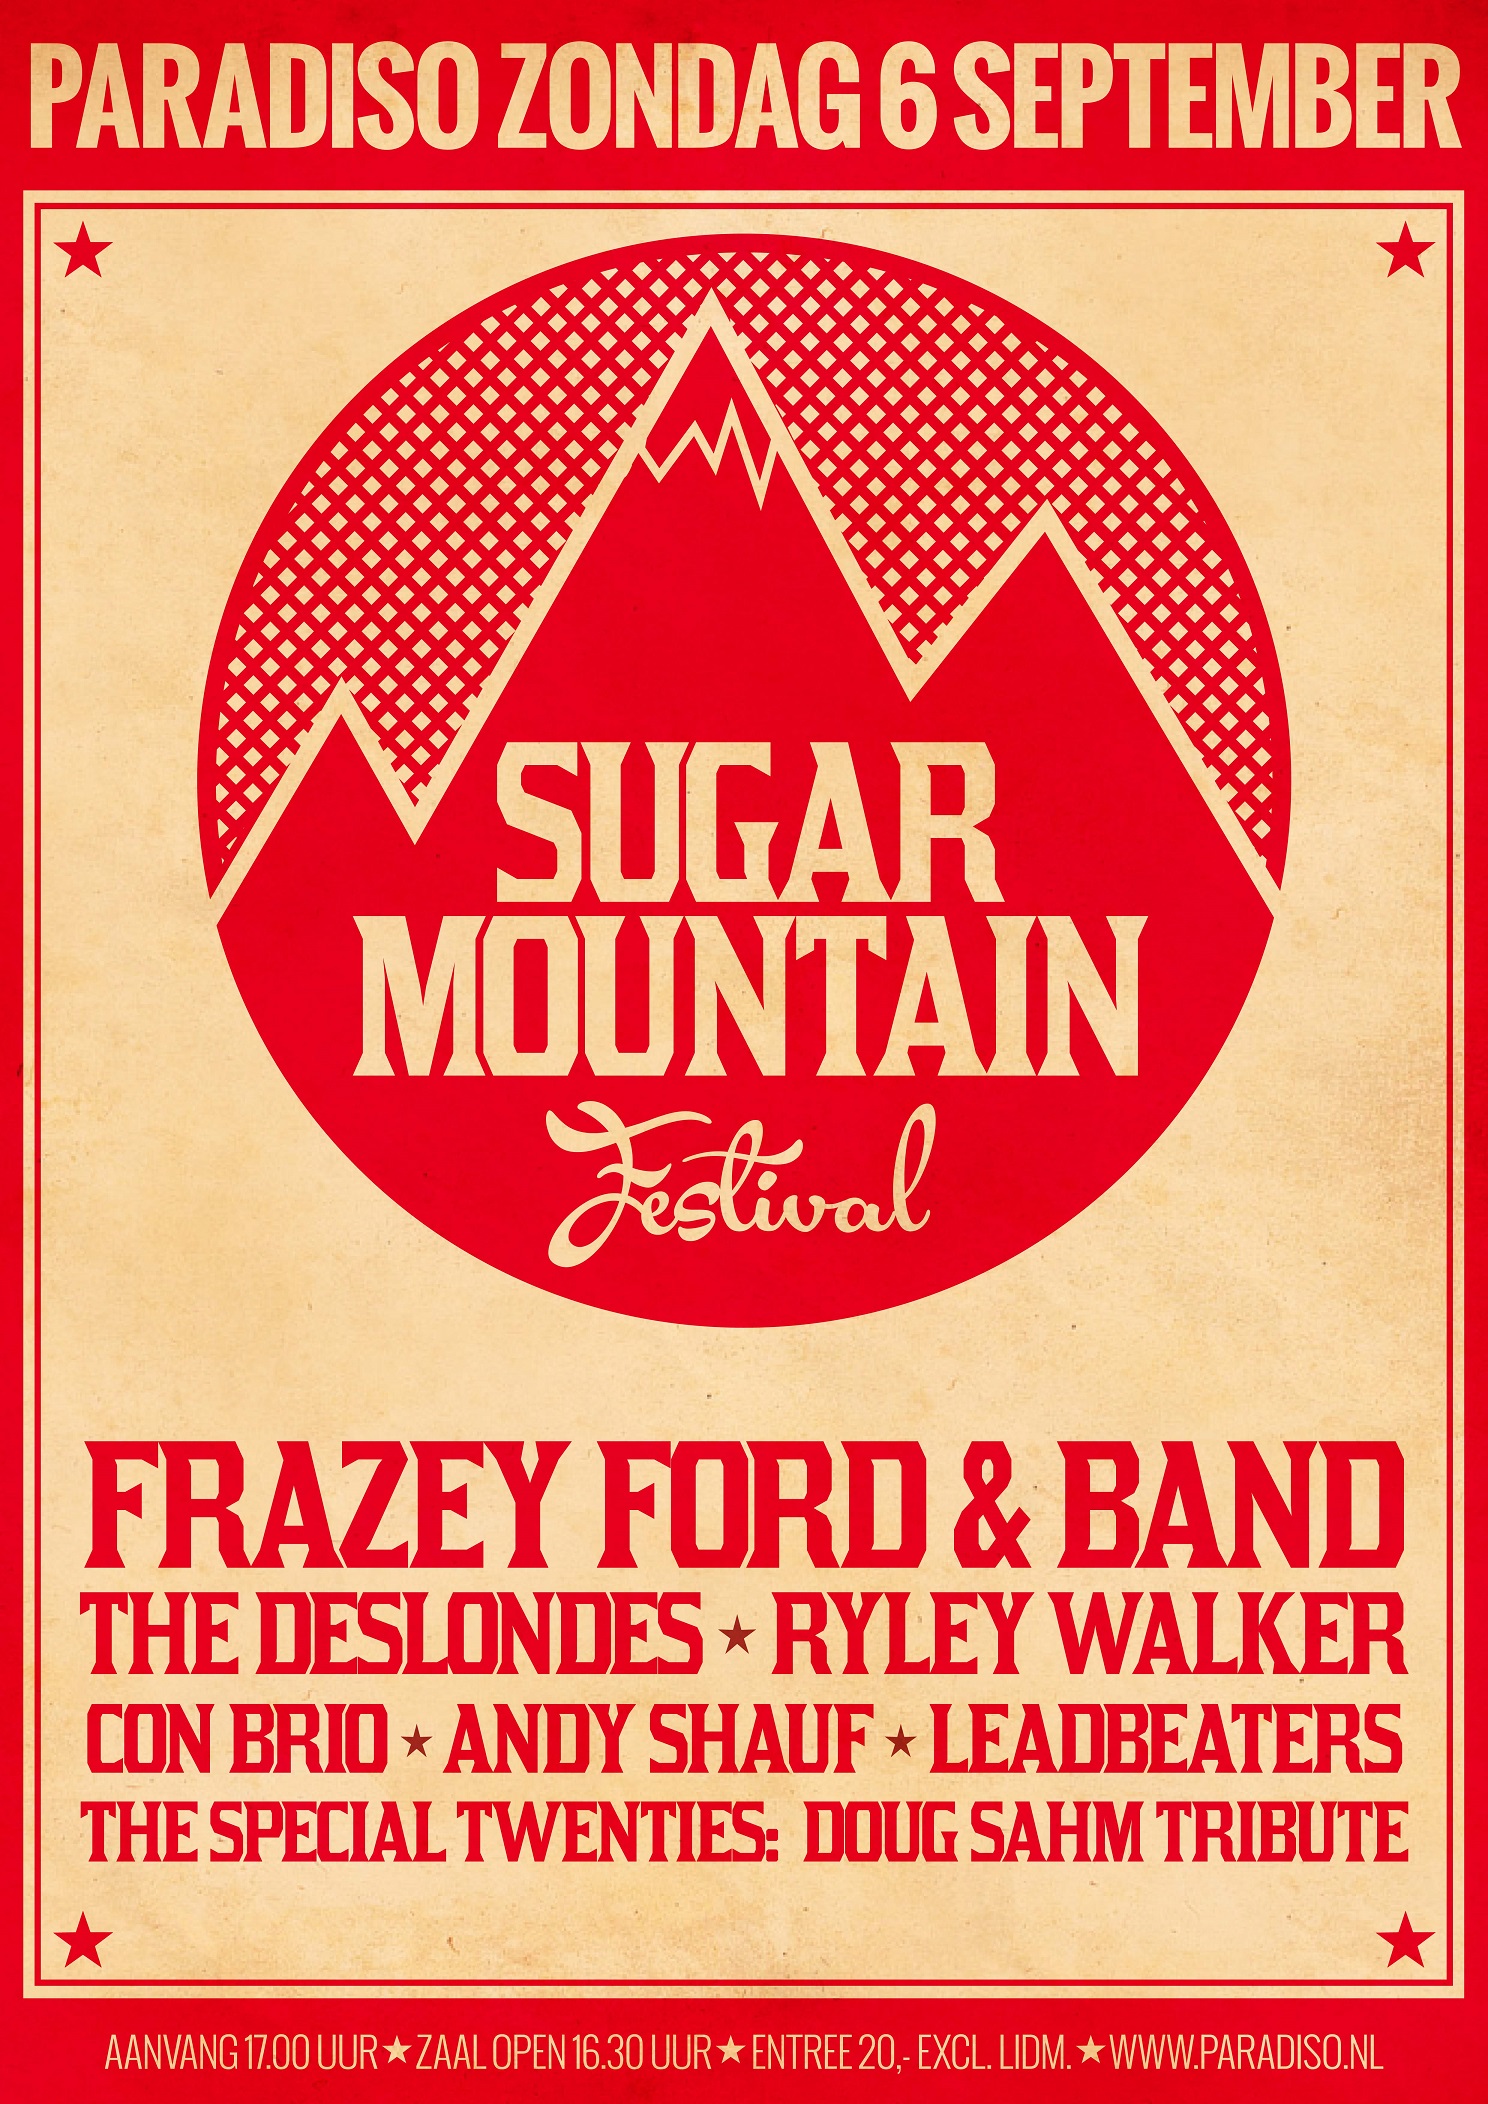 Winactie: Sugar Mountain Festival zondag 6 september in Paradiso